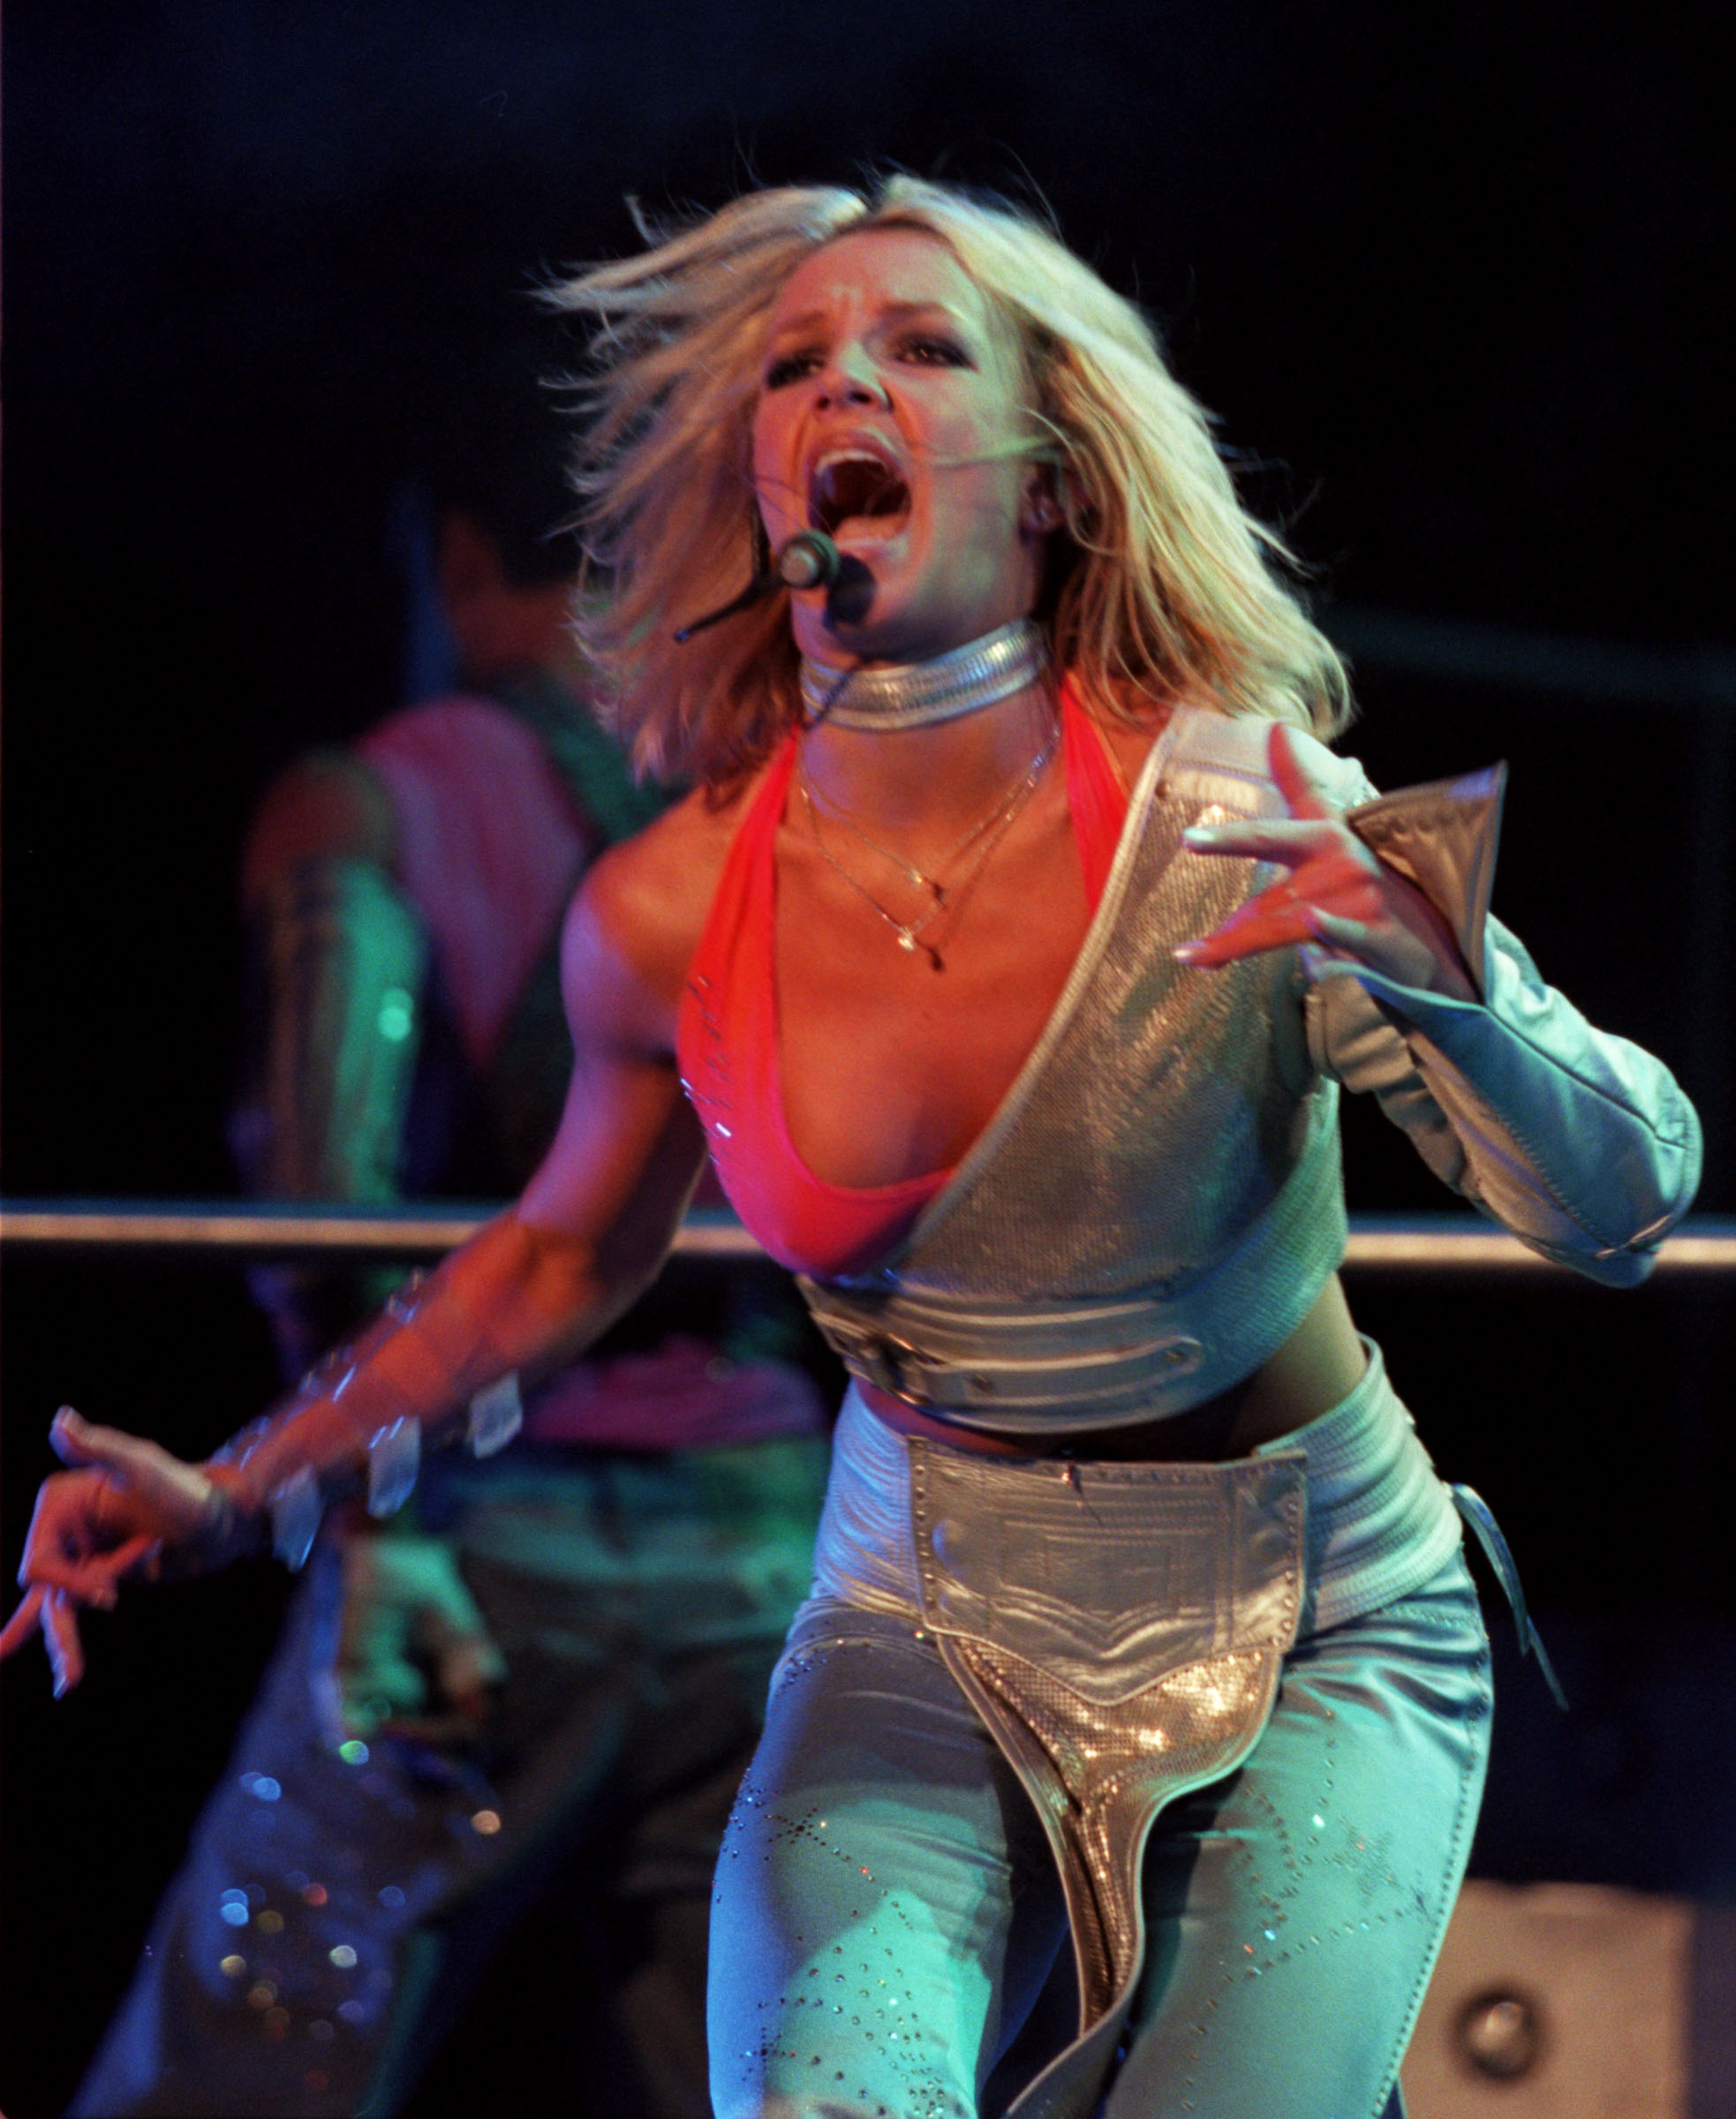 Teen pop star Britney Spears performs Saturday night at the Verizon Wireless Amphitheater in Irvine.